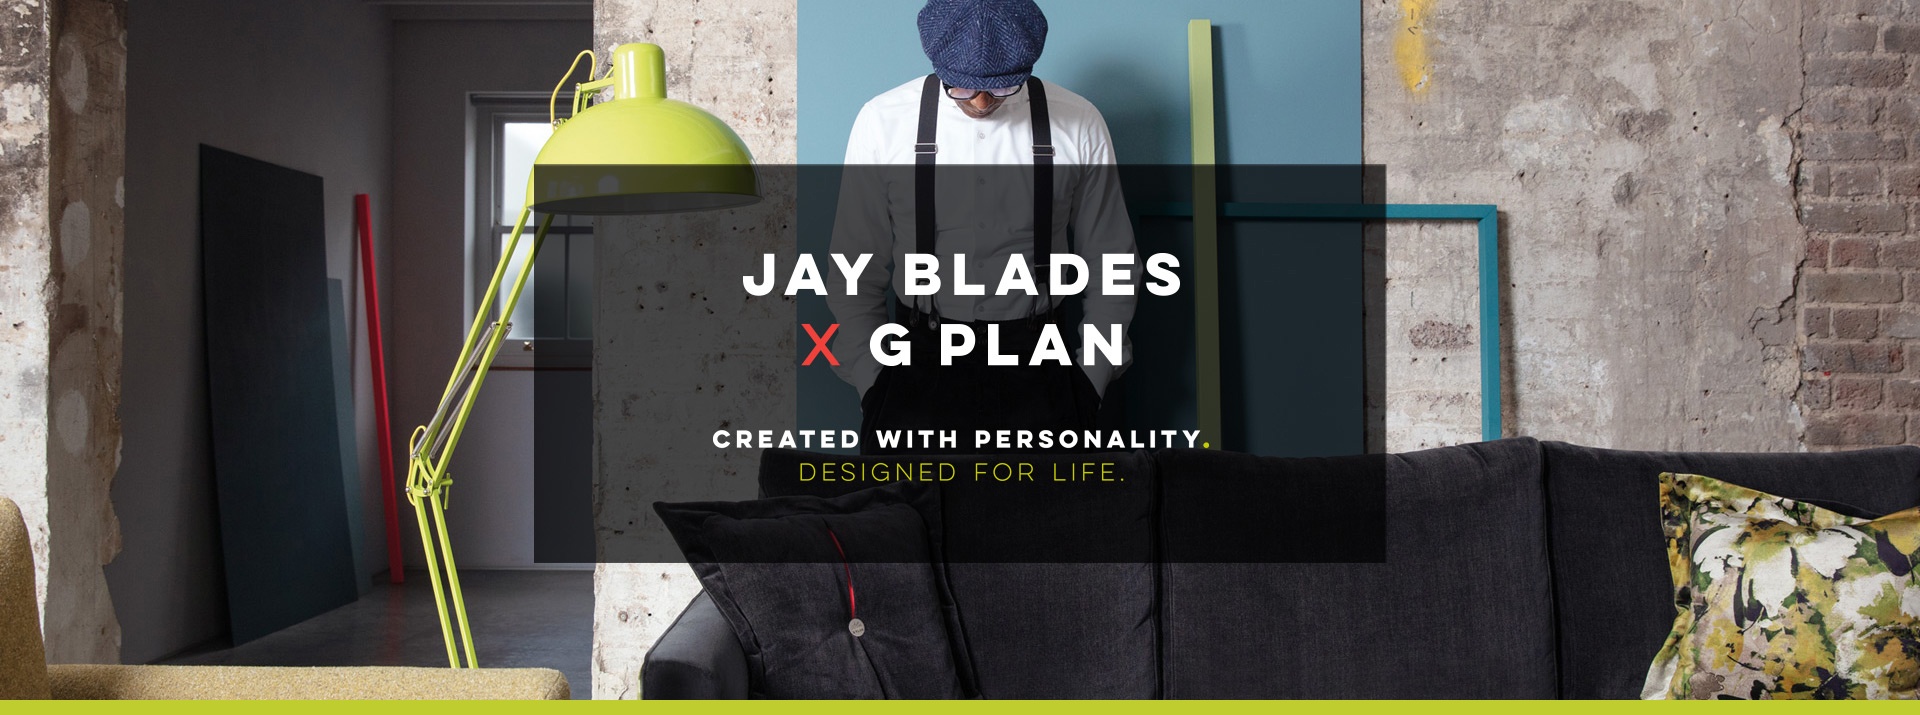 Jay Blades Main Landing Page Banner